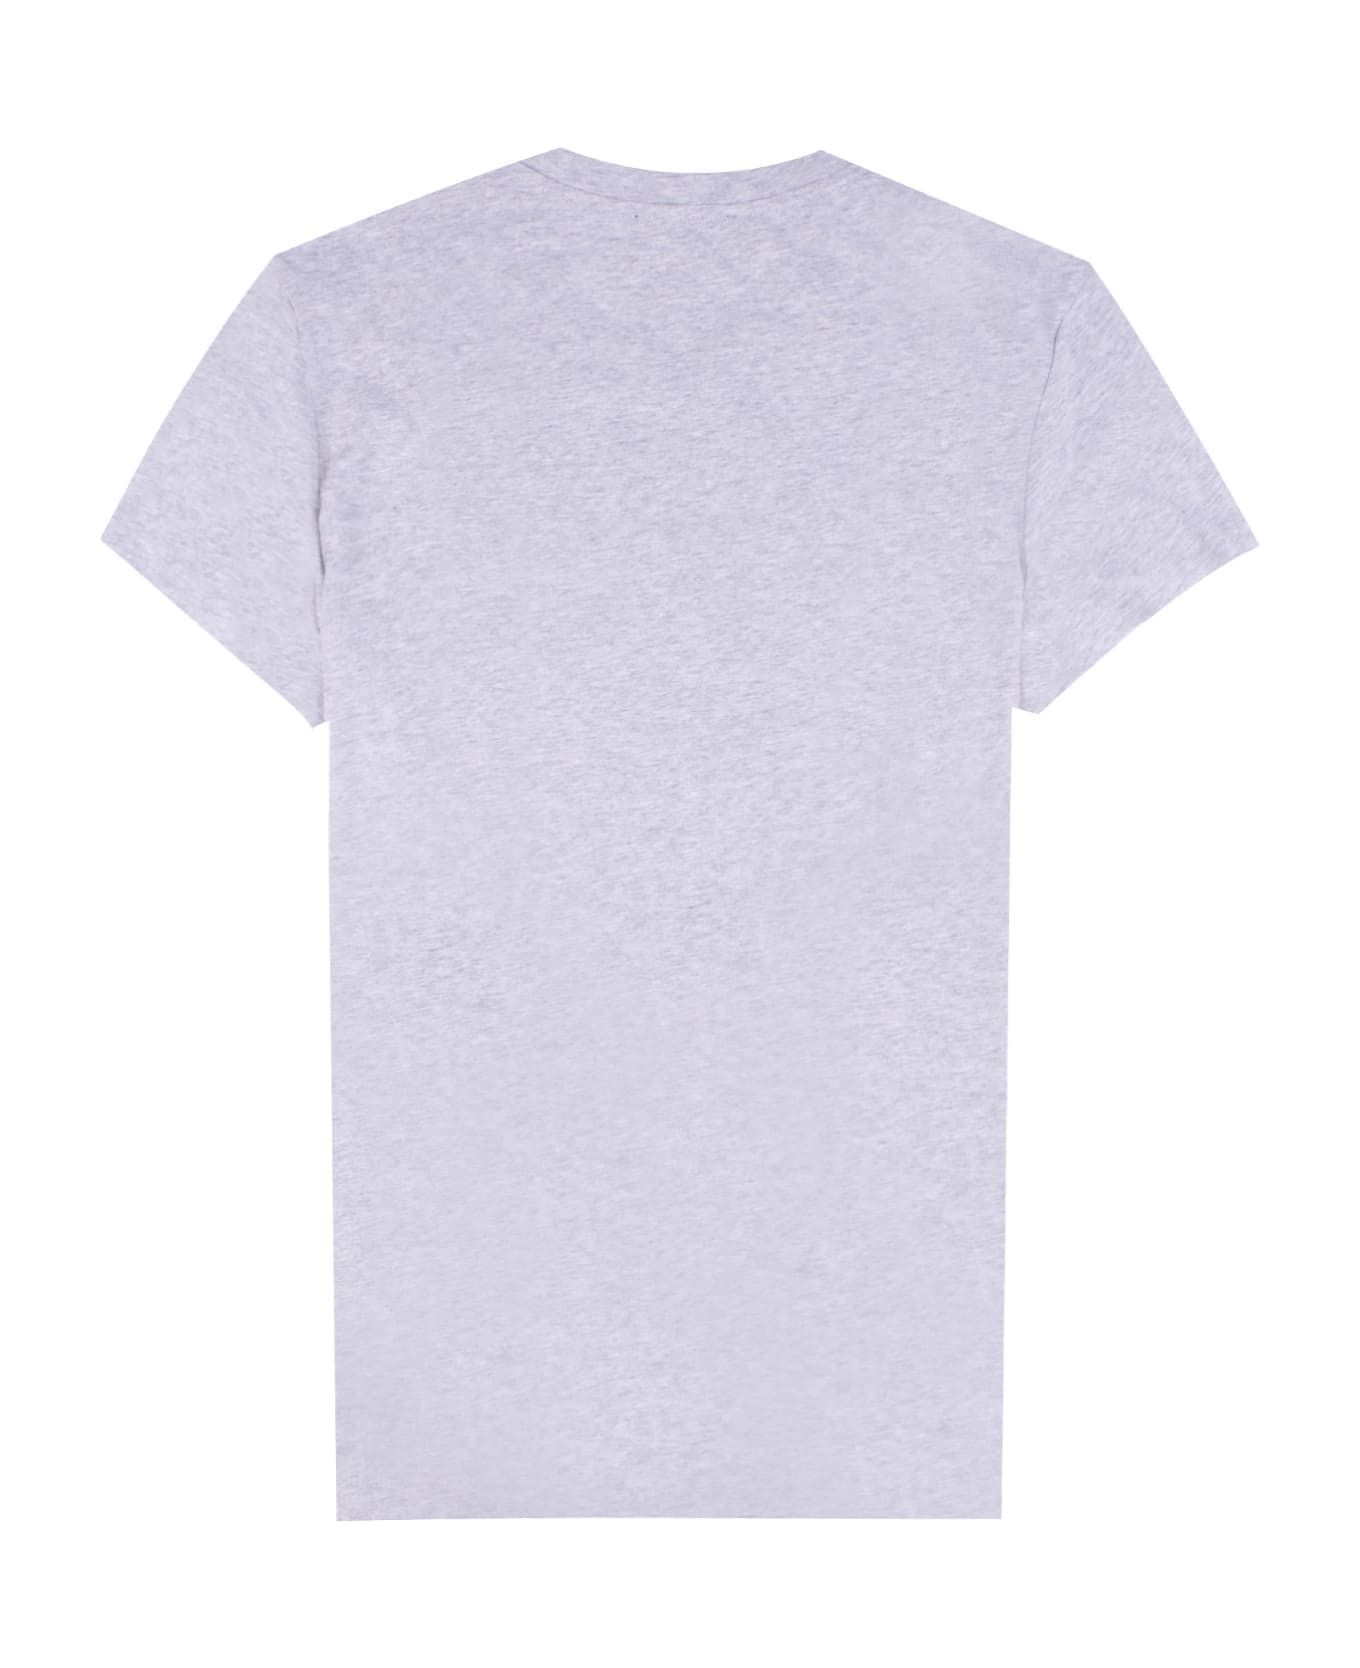 Balmain Cotton T-shirt - Grey